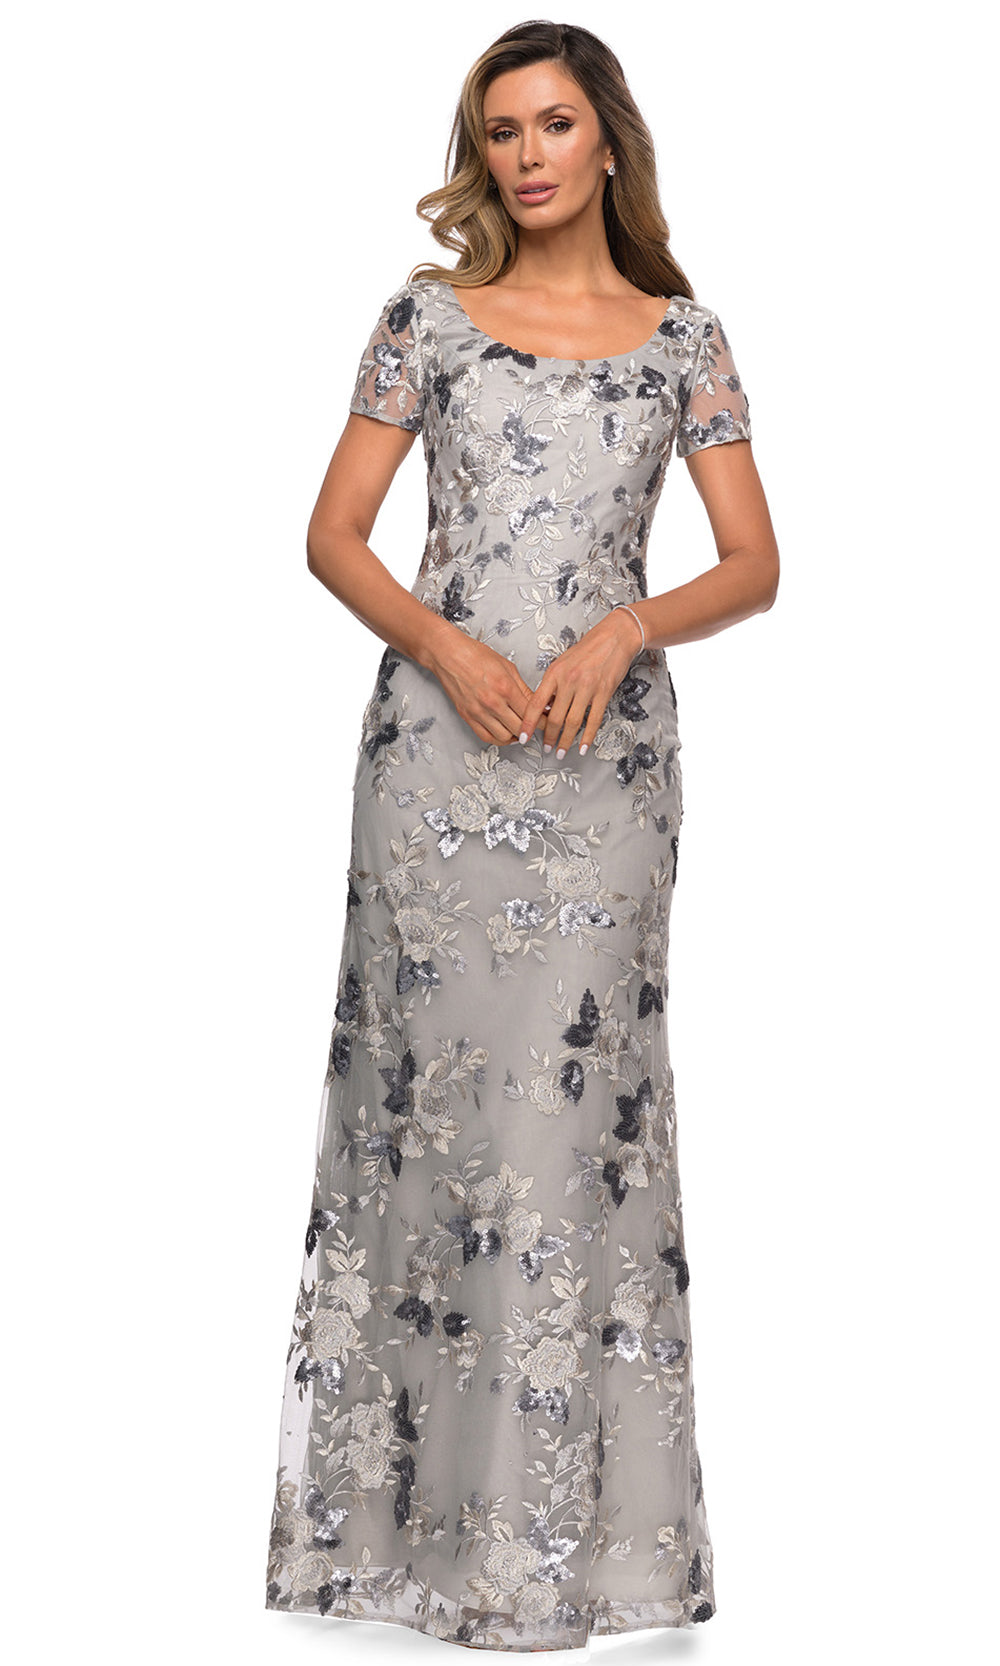 La Femme - 27991 Short Sleeve Sequined Rosette Long Dress In Silver & Gray